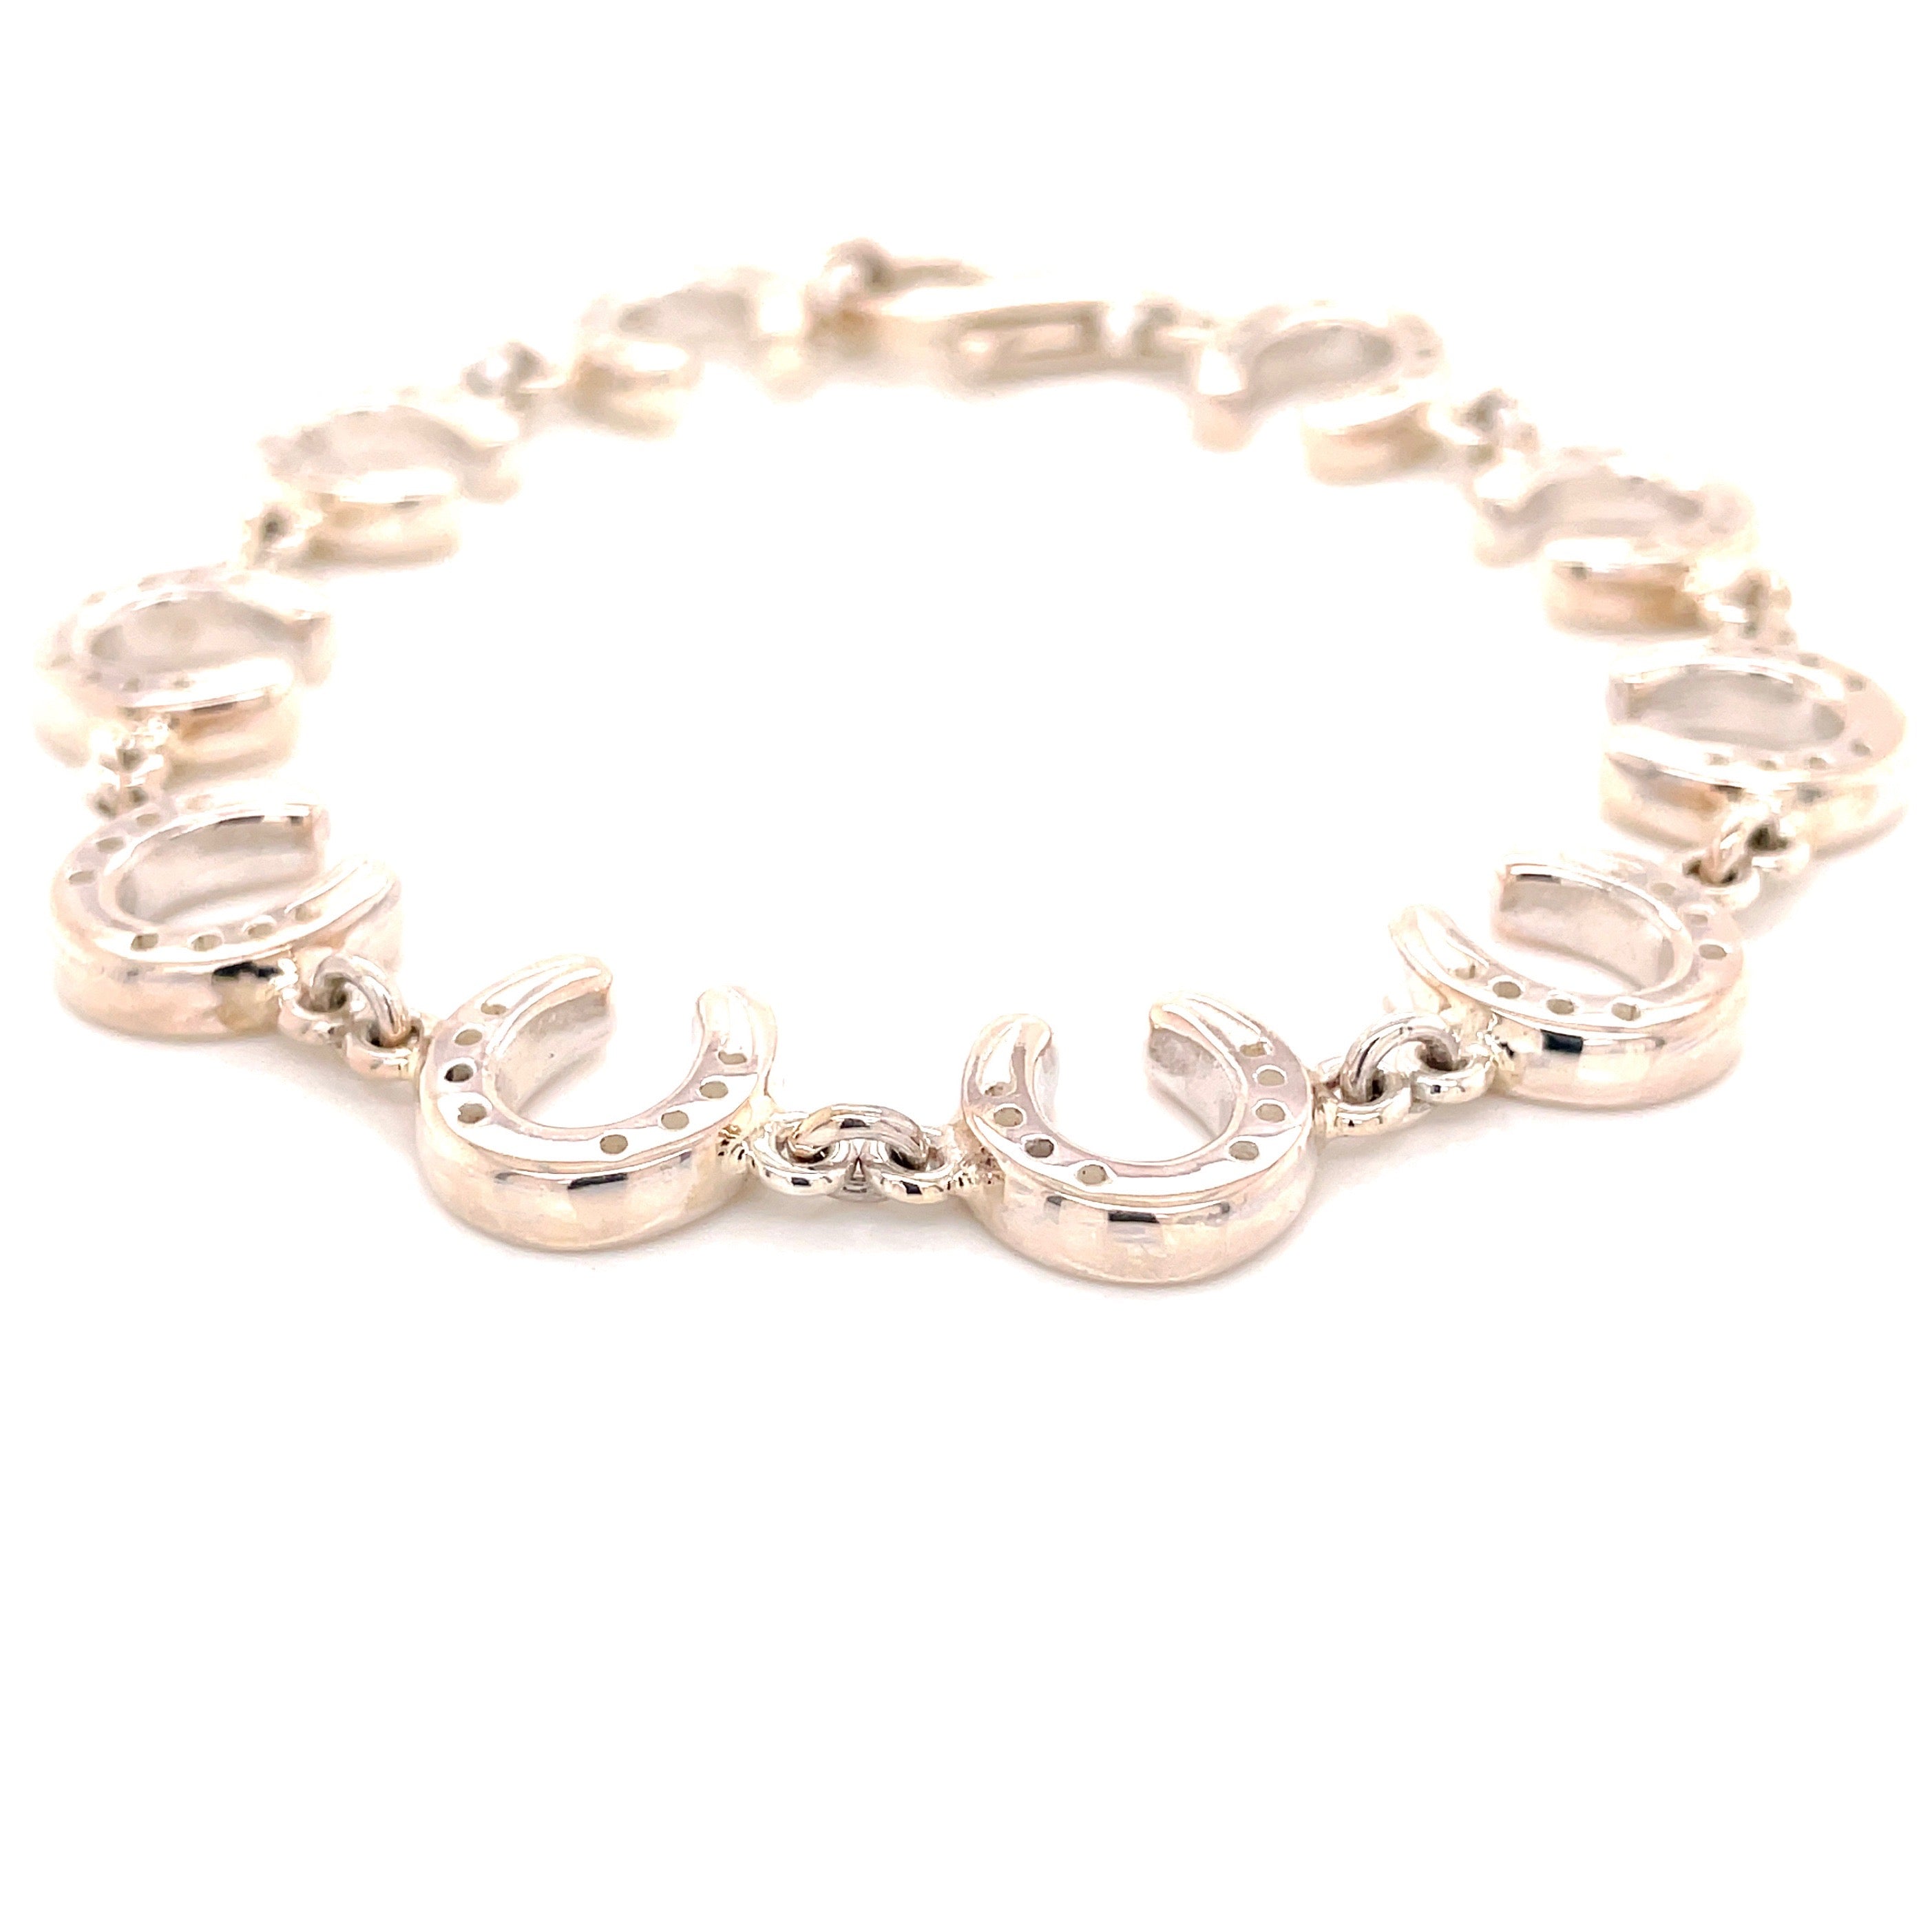 Sterling silver horseshoe bracelet